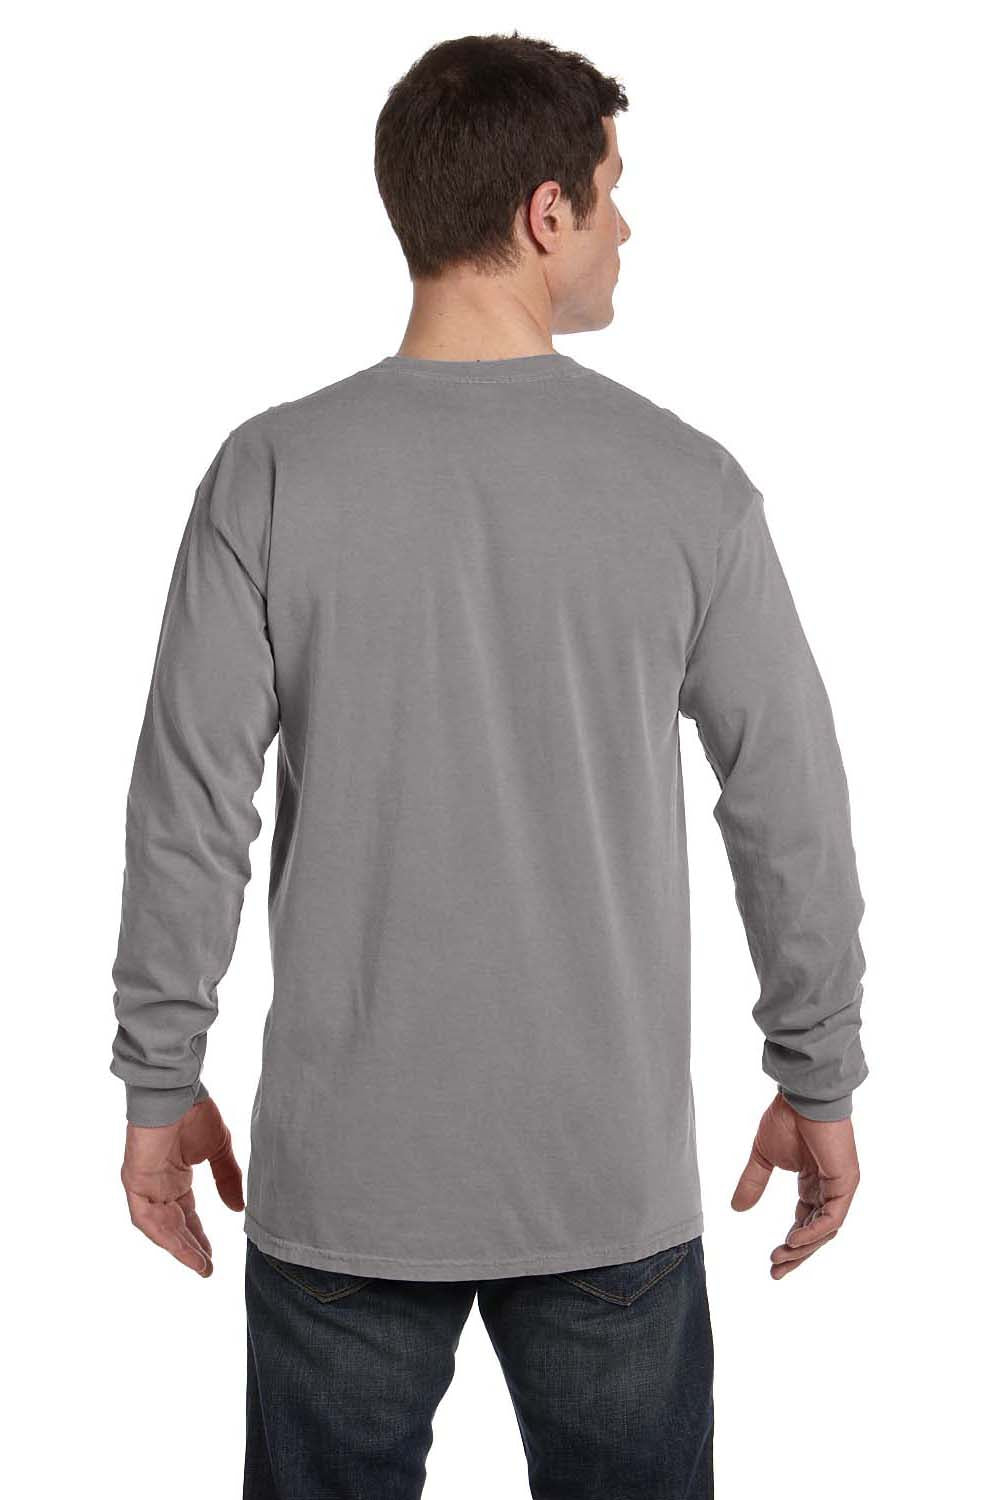 Comfort Colors C6014 Mens Long Sleeve Crewneck T-Shirt Grey Back